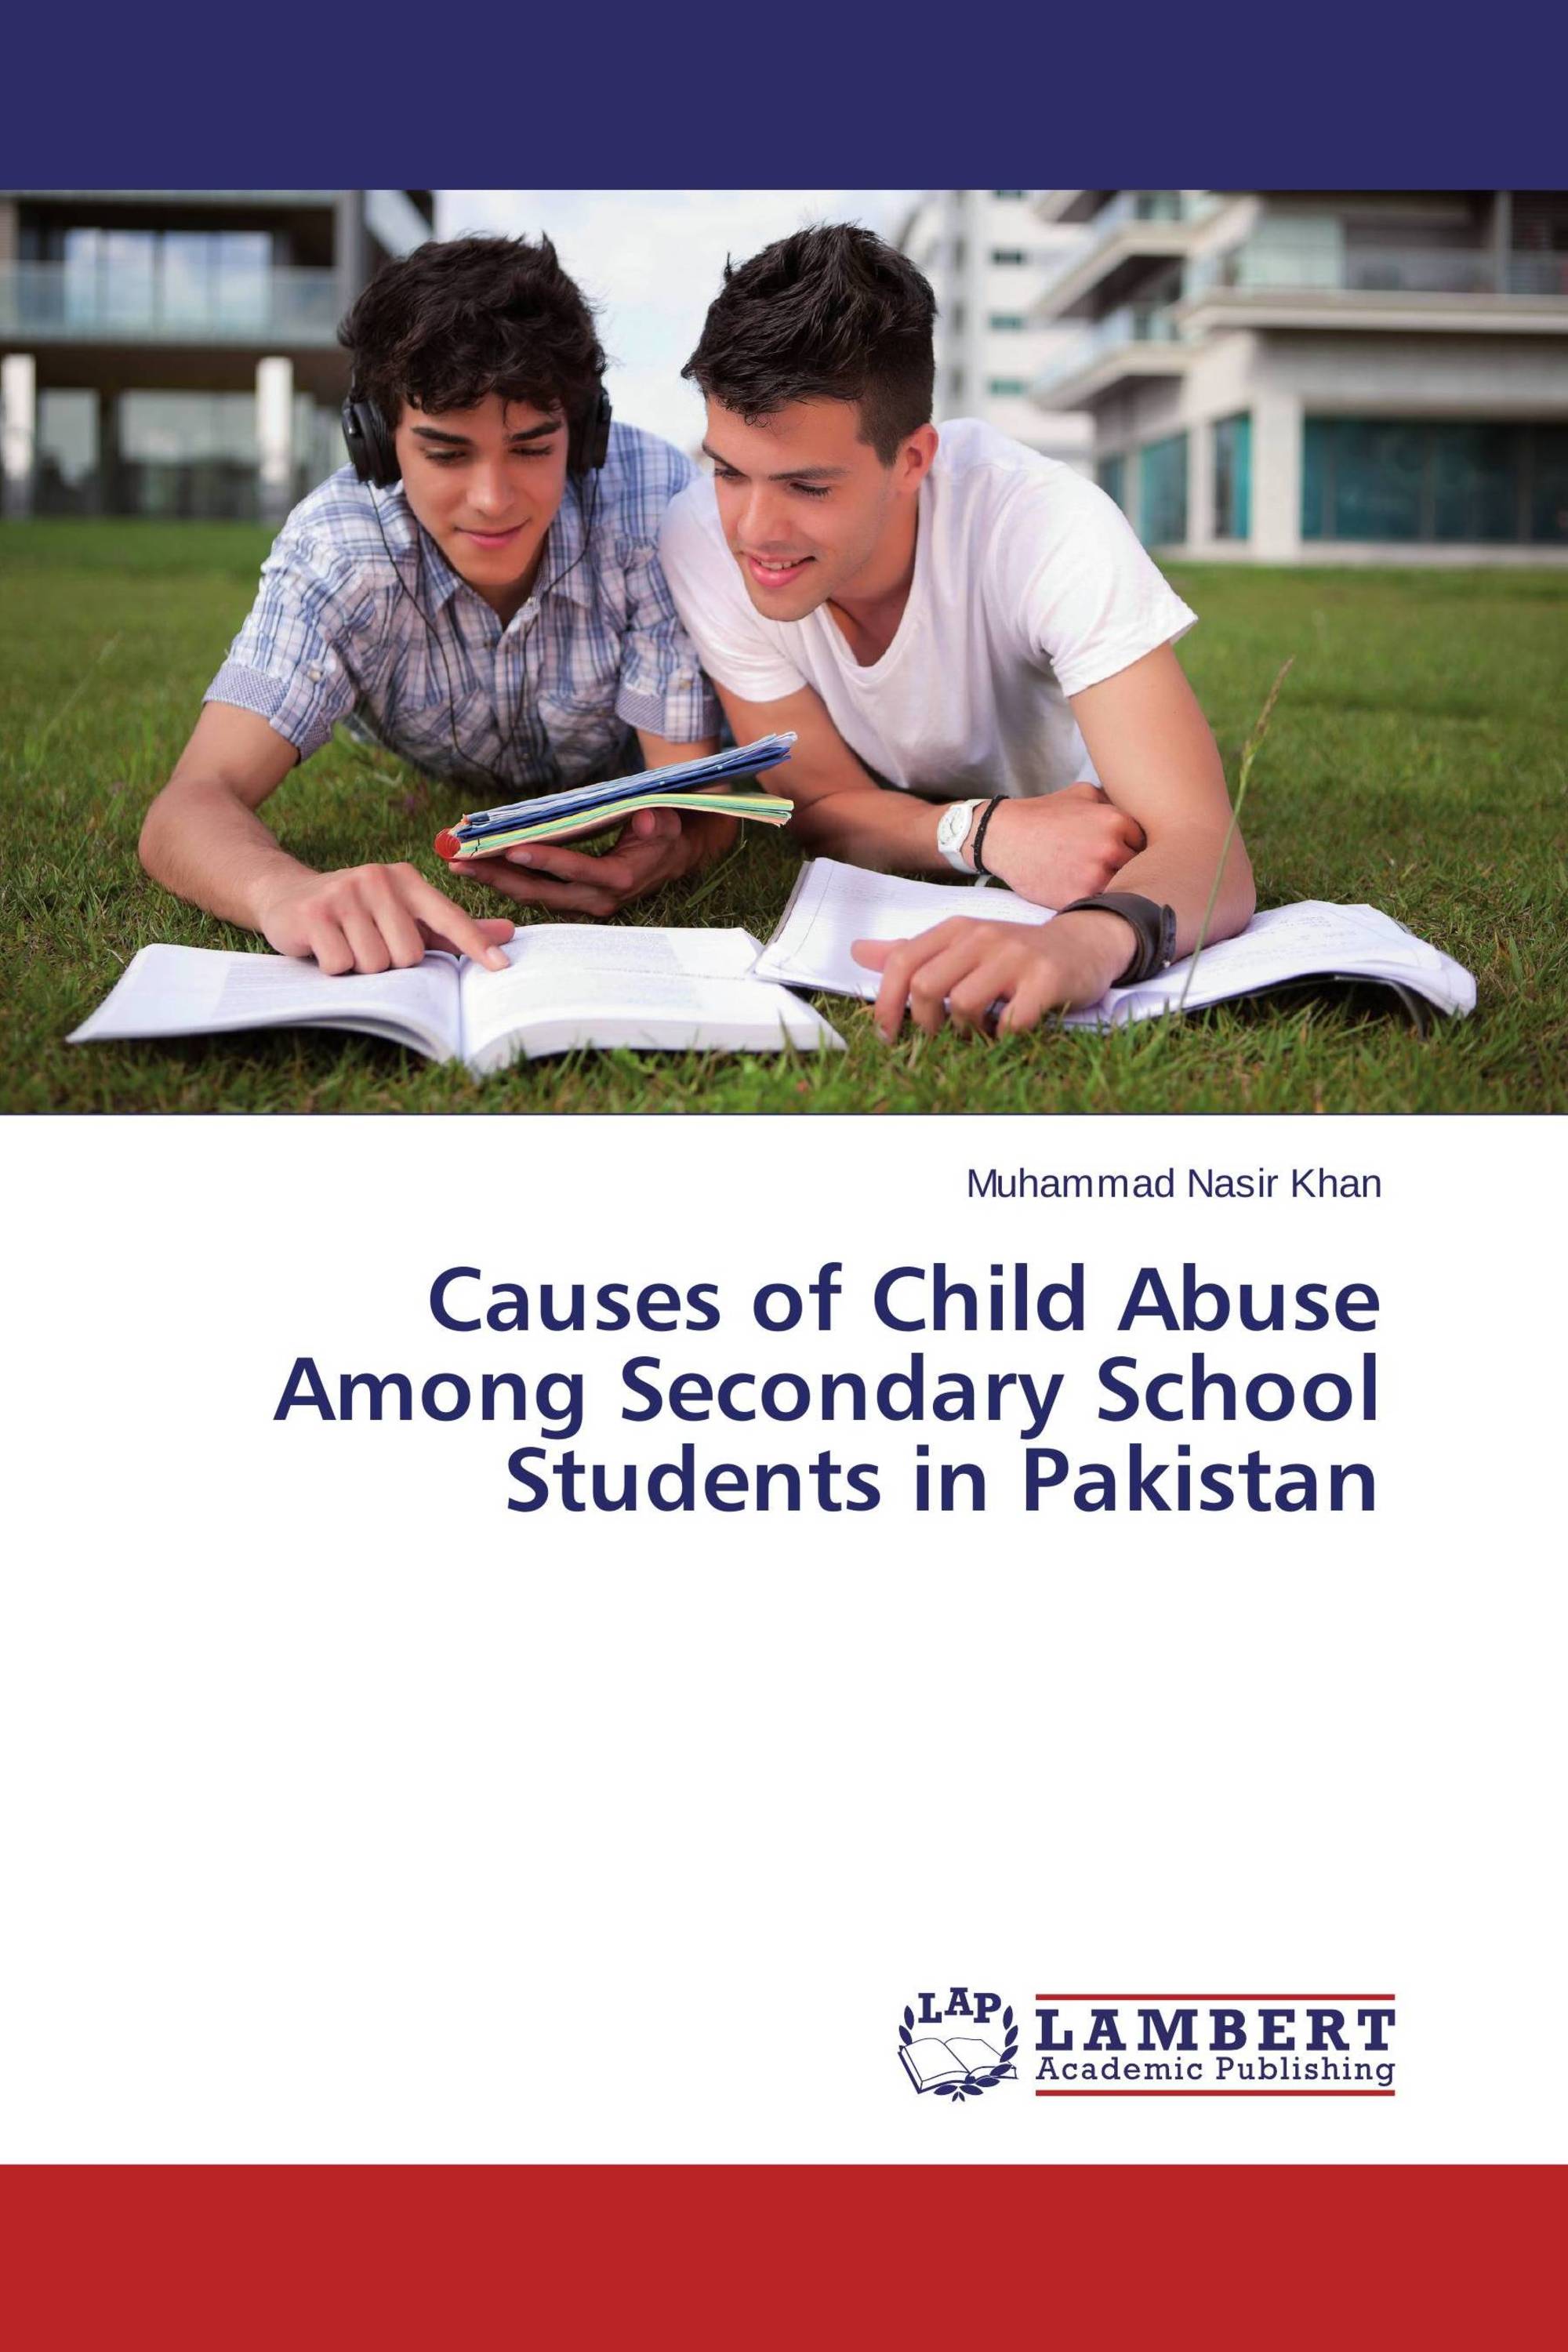 essay on child abuse in pakistan